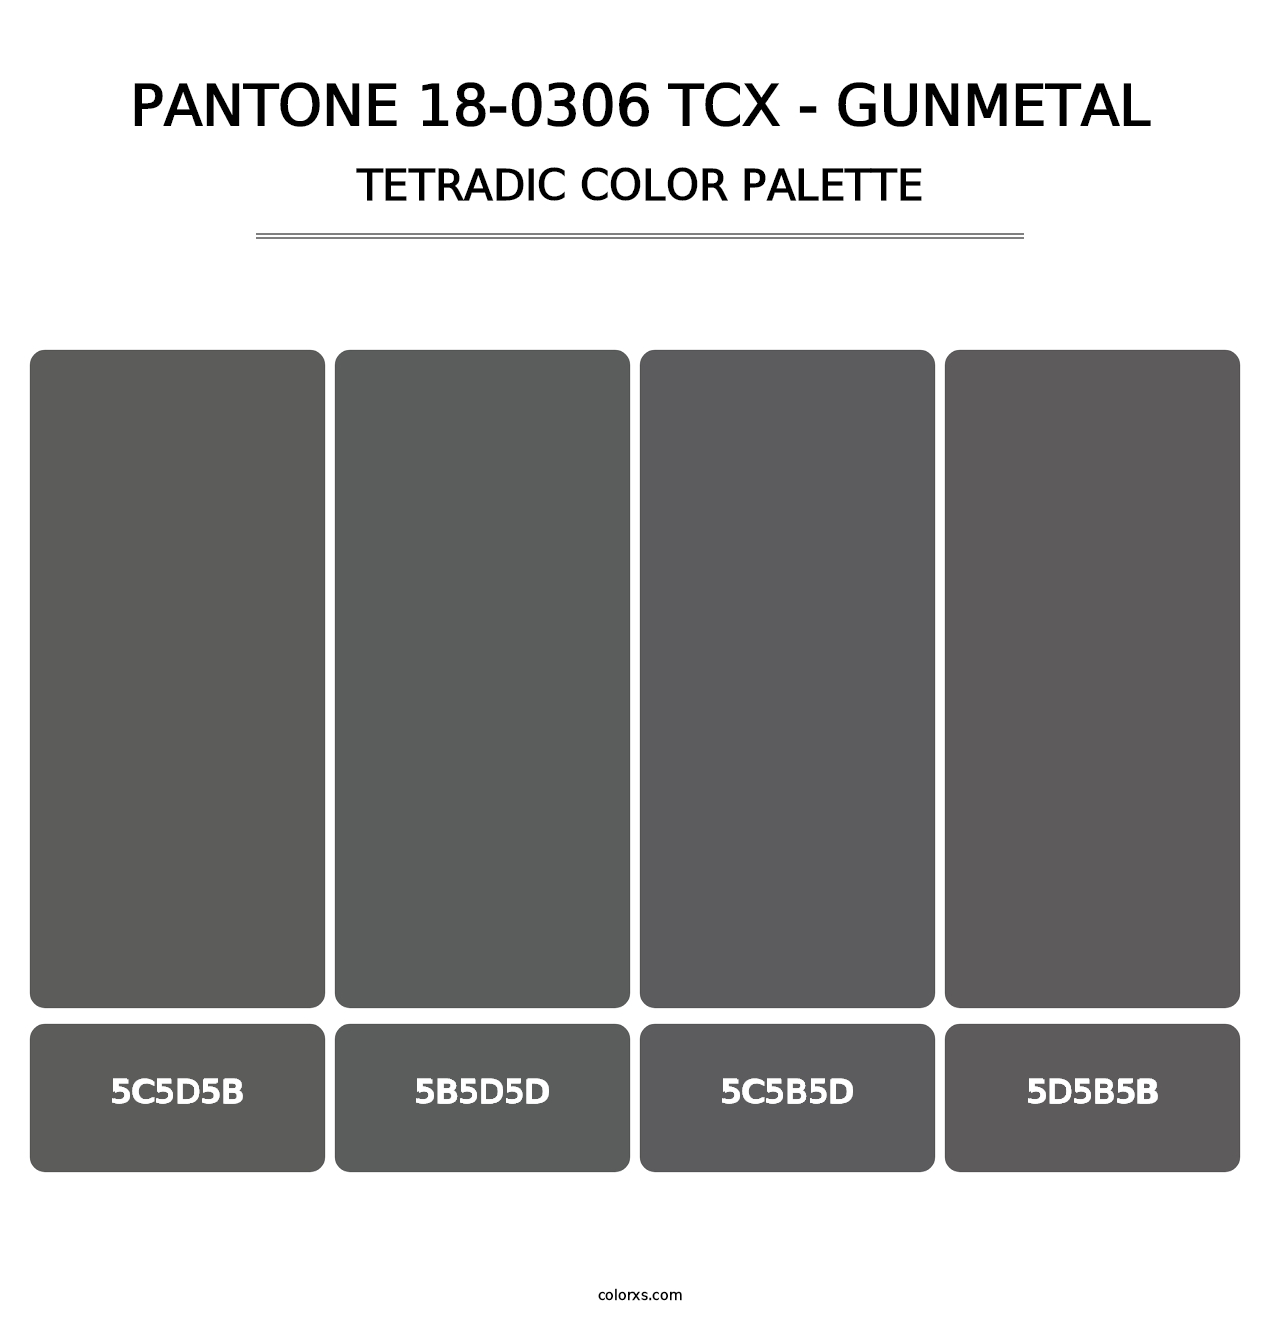 PANTONE 18-0306 TCX - Gunmetal - Tetradic Color Palette